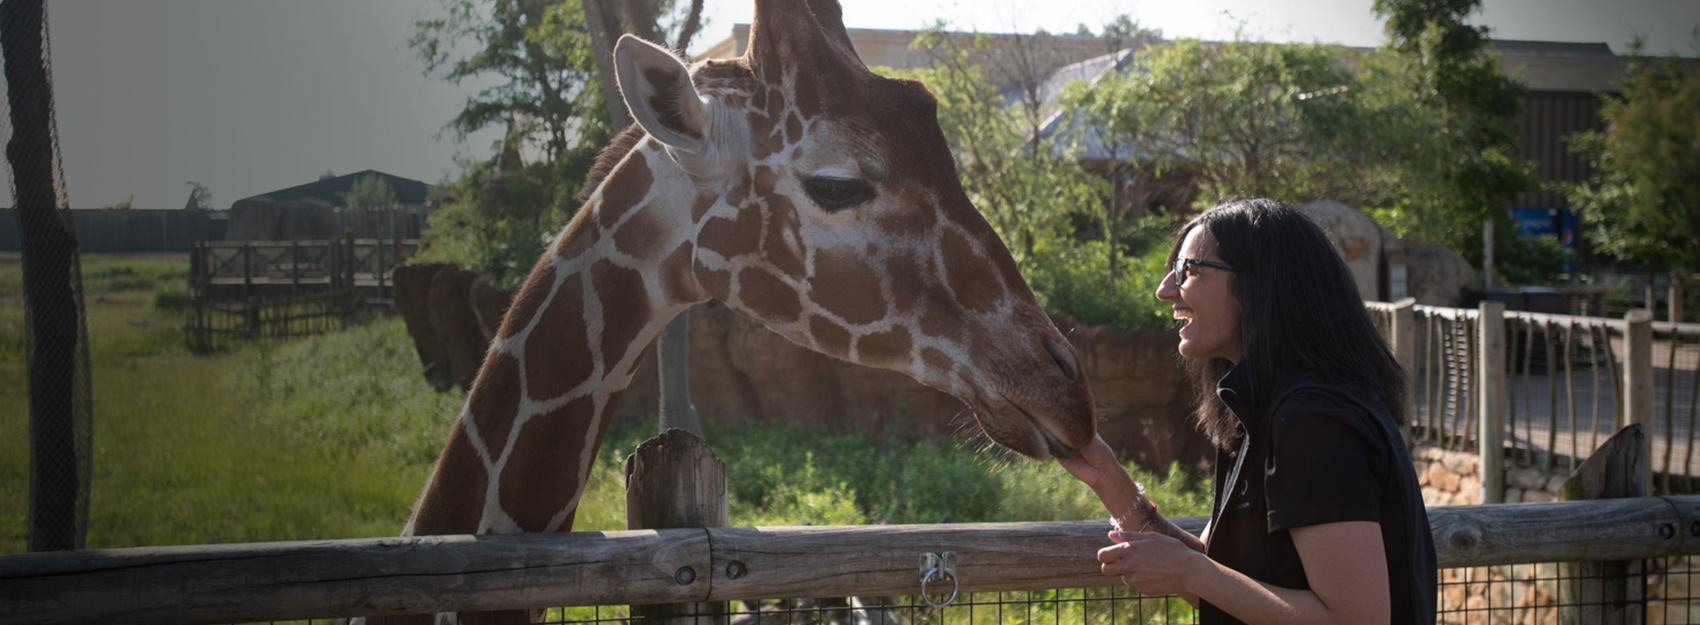 giraffe with vet at the Columbus Zoo